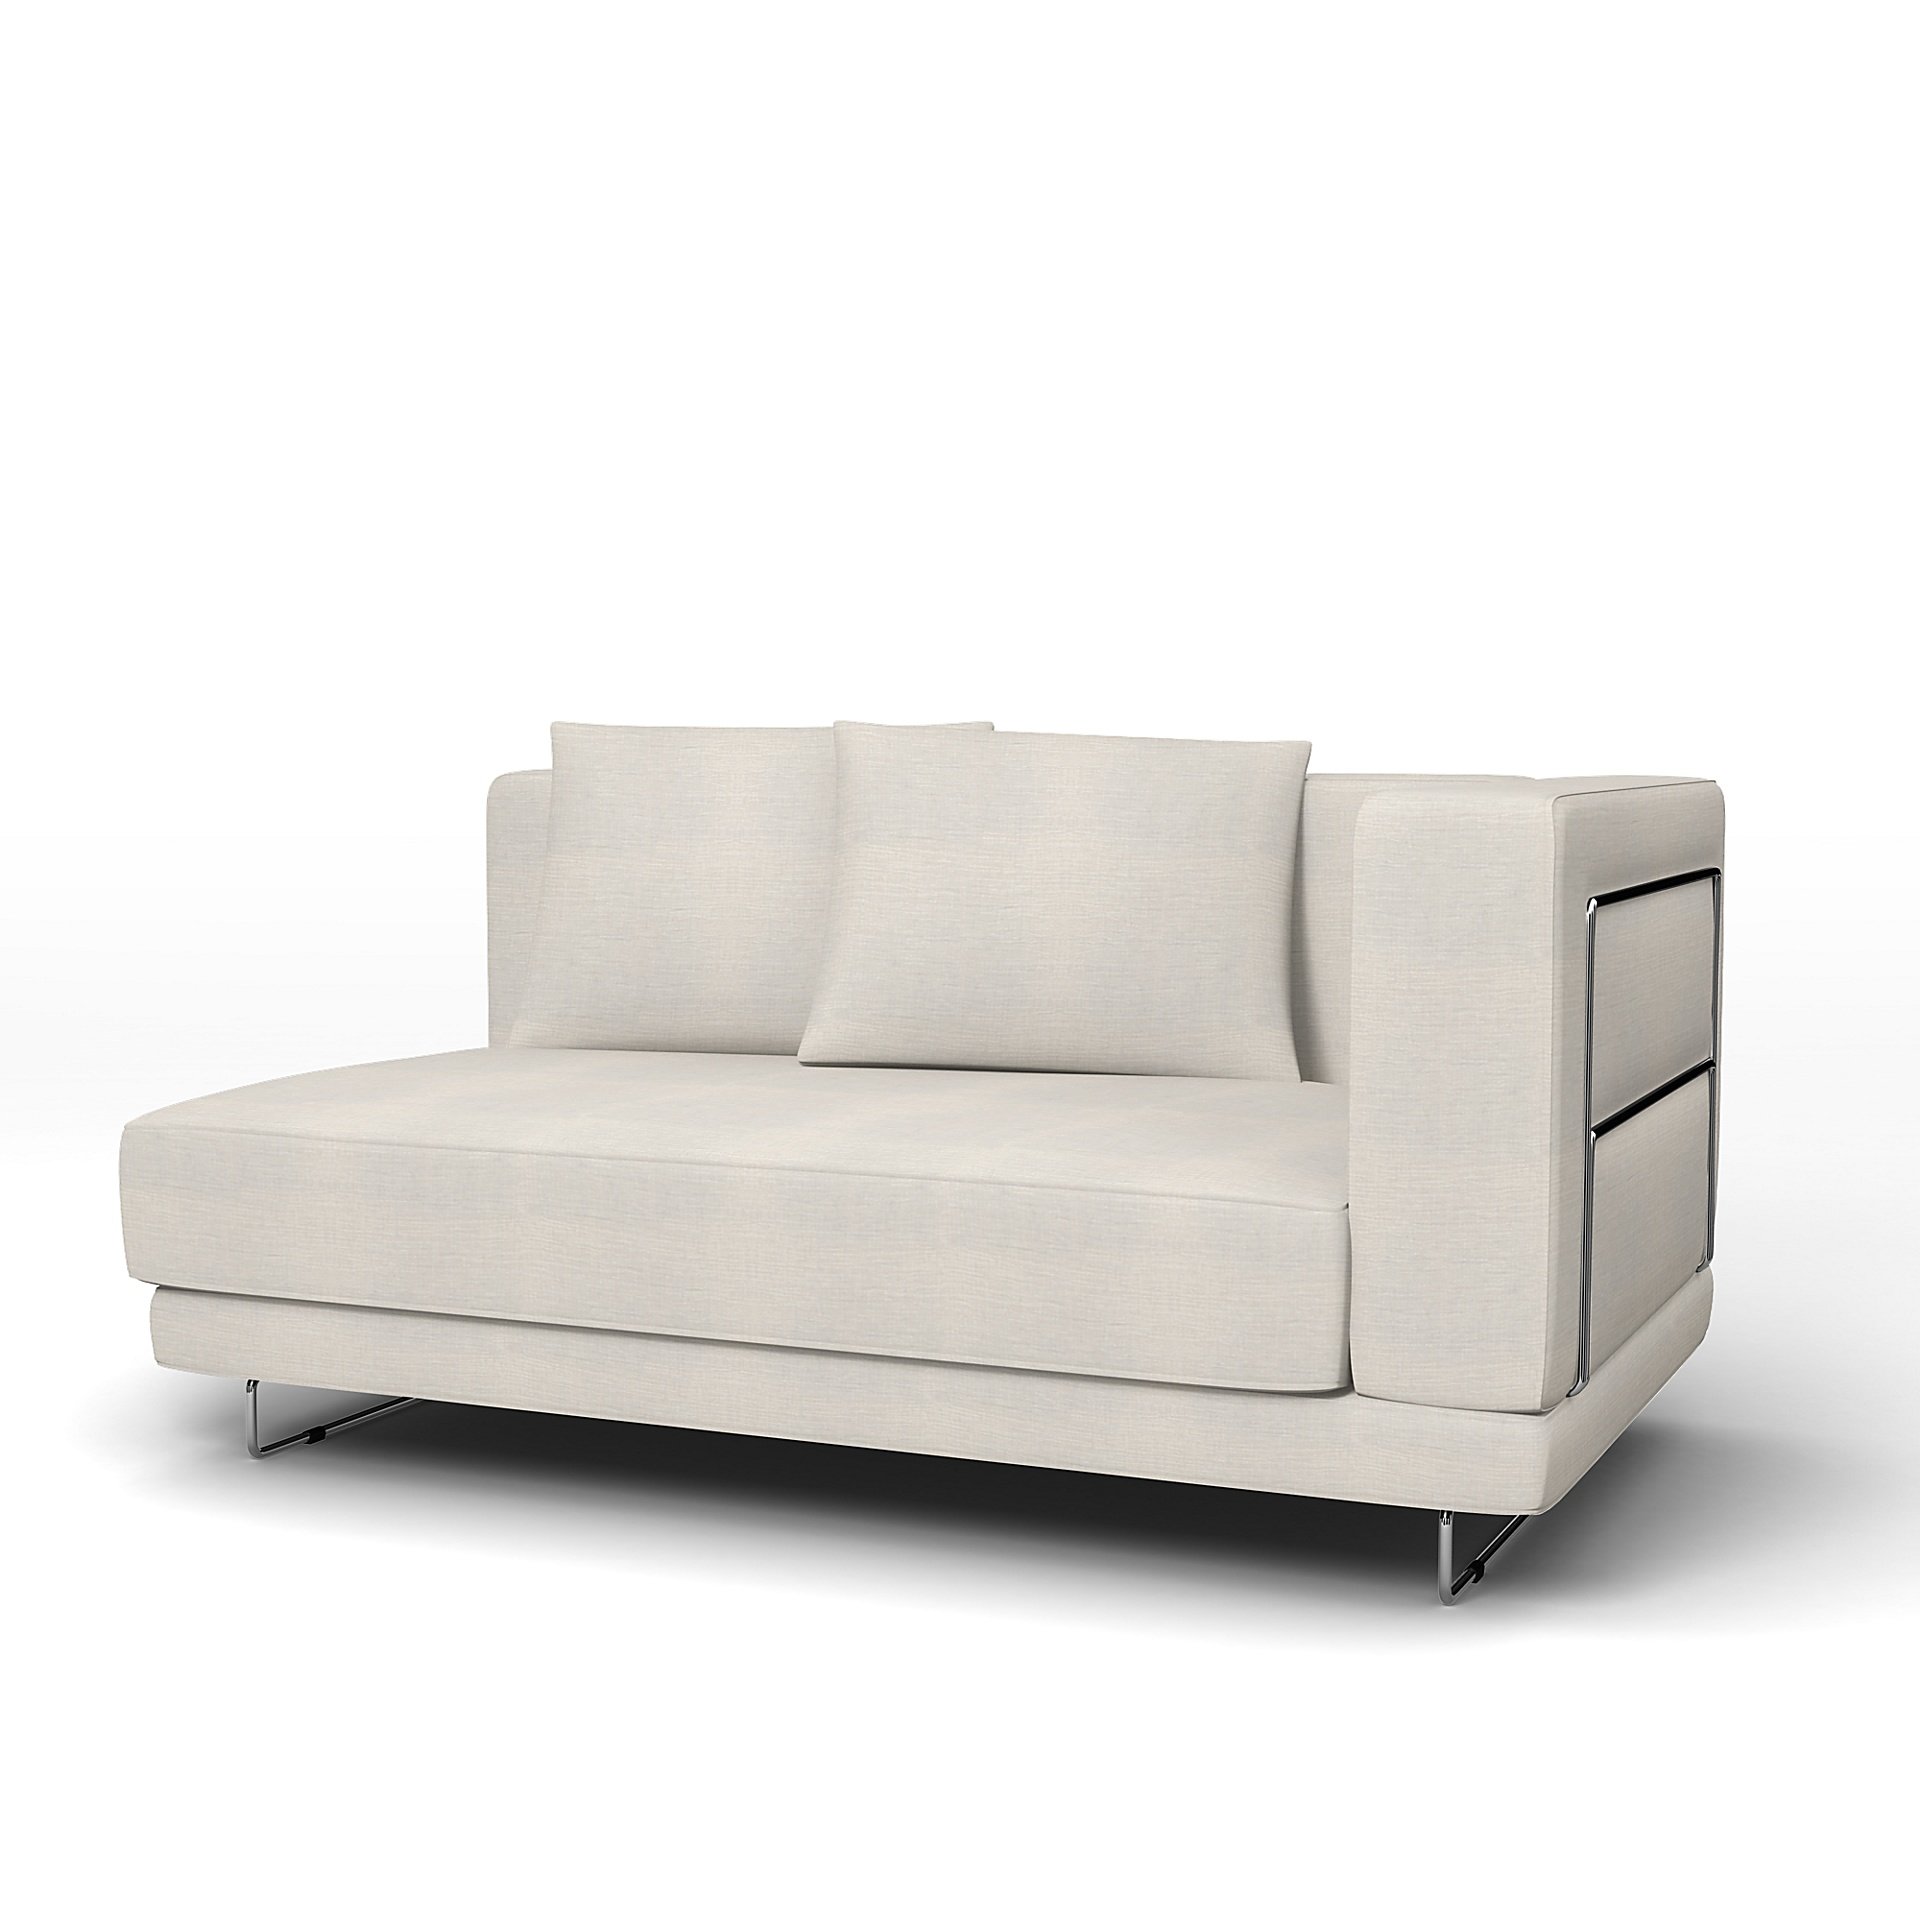 IKEA - Tylosand Sofa with Armrest Cover, Soft White, Linen - Bemz